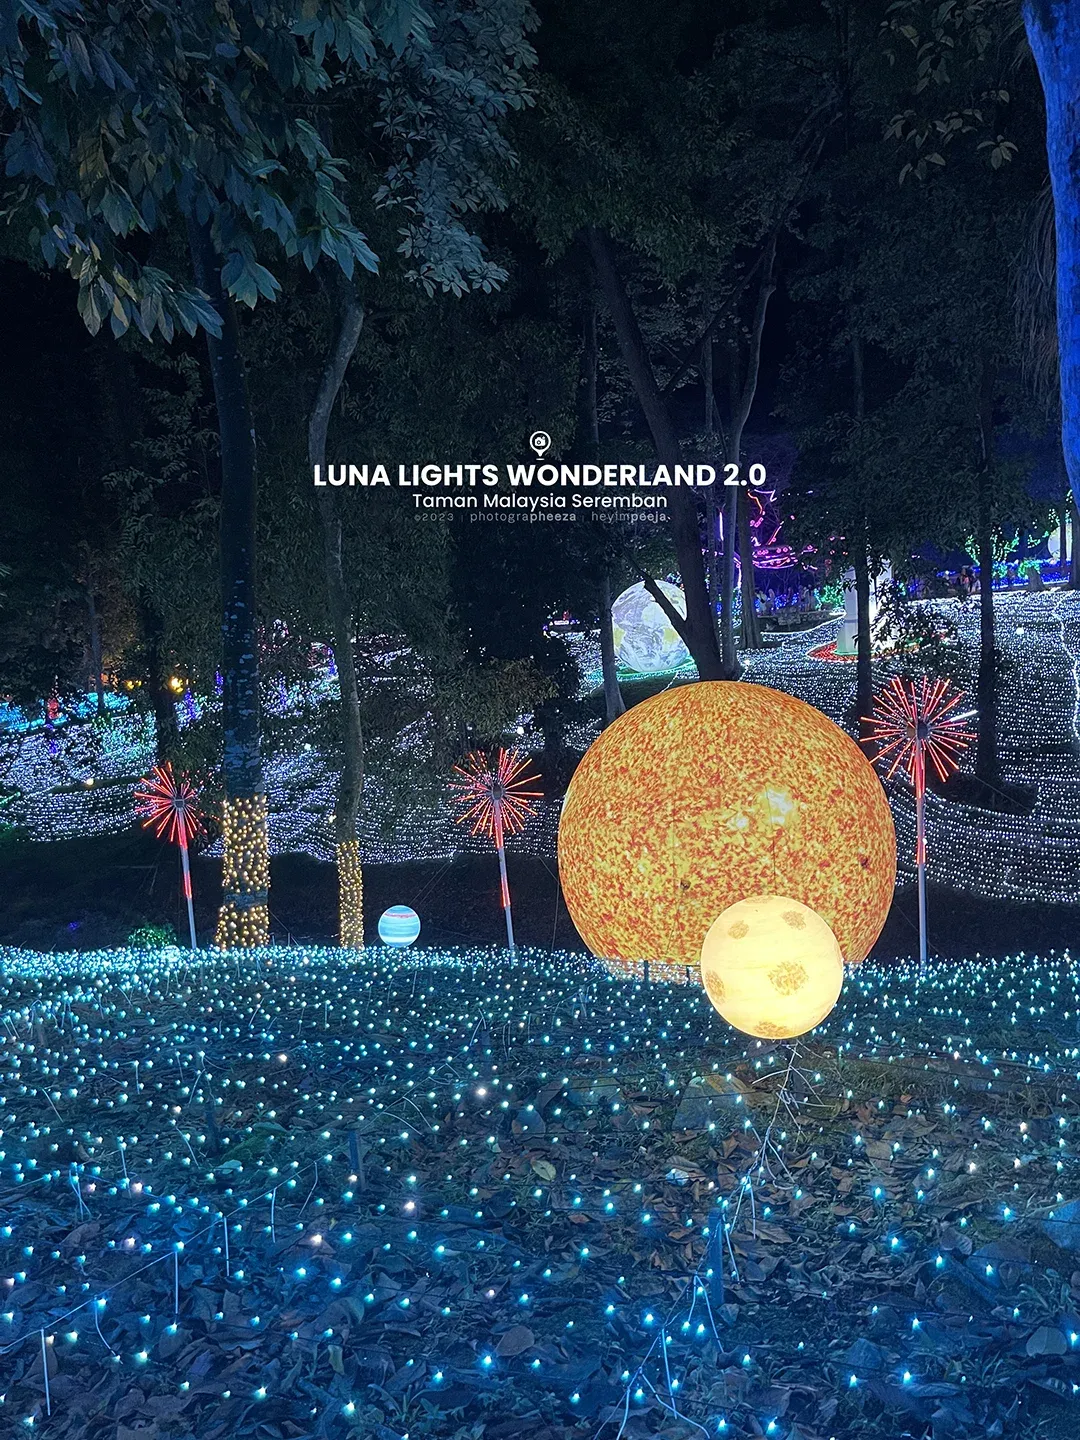 Luna Lights Wonderland 2.0 Taman Malaysia Seremban